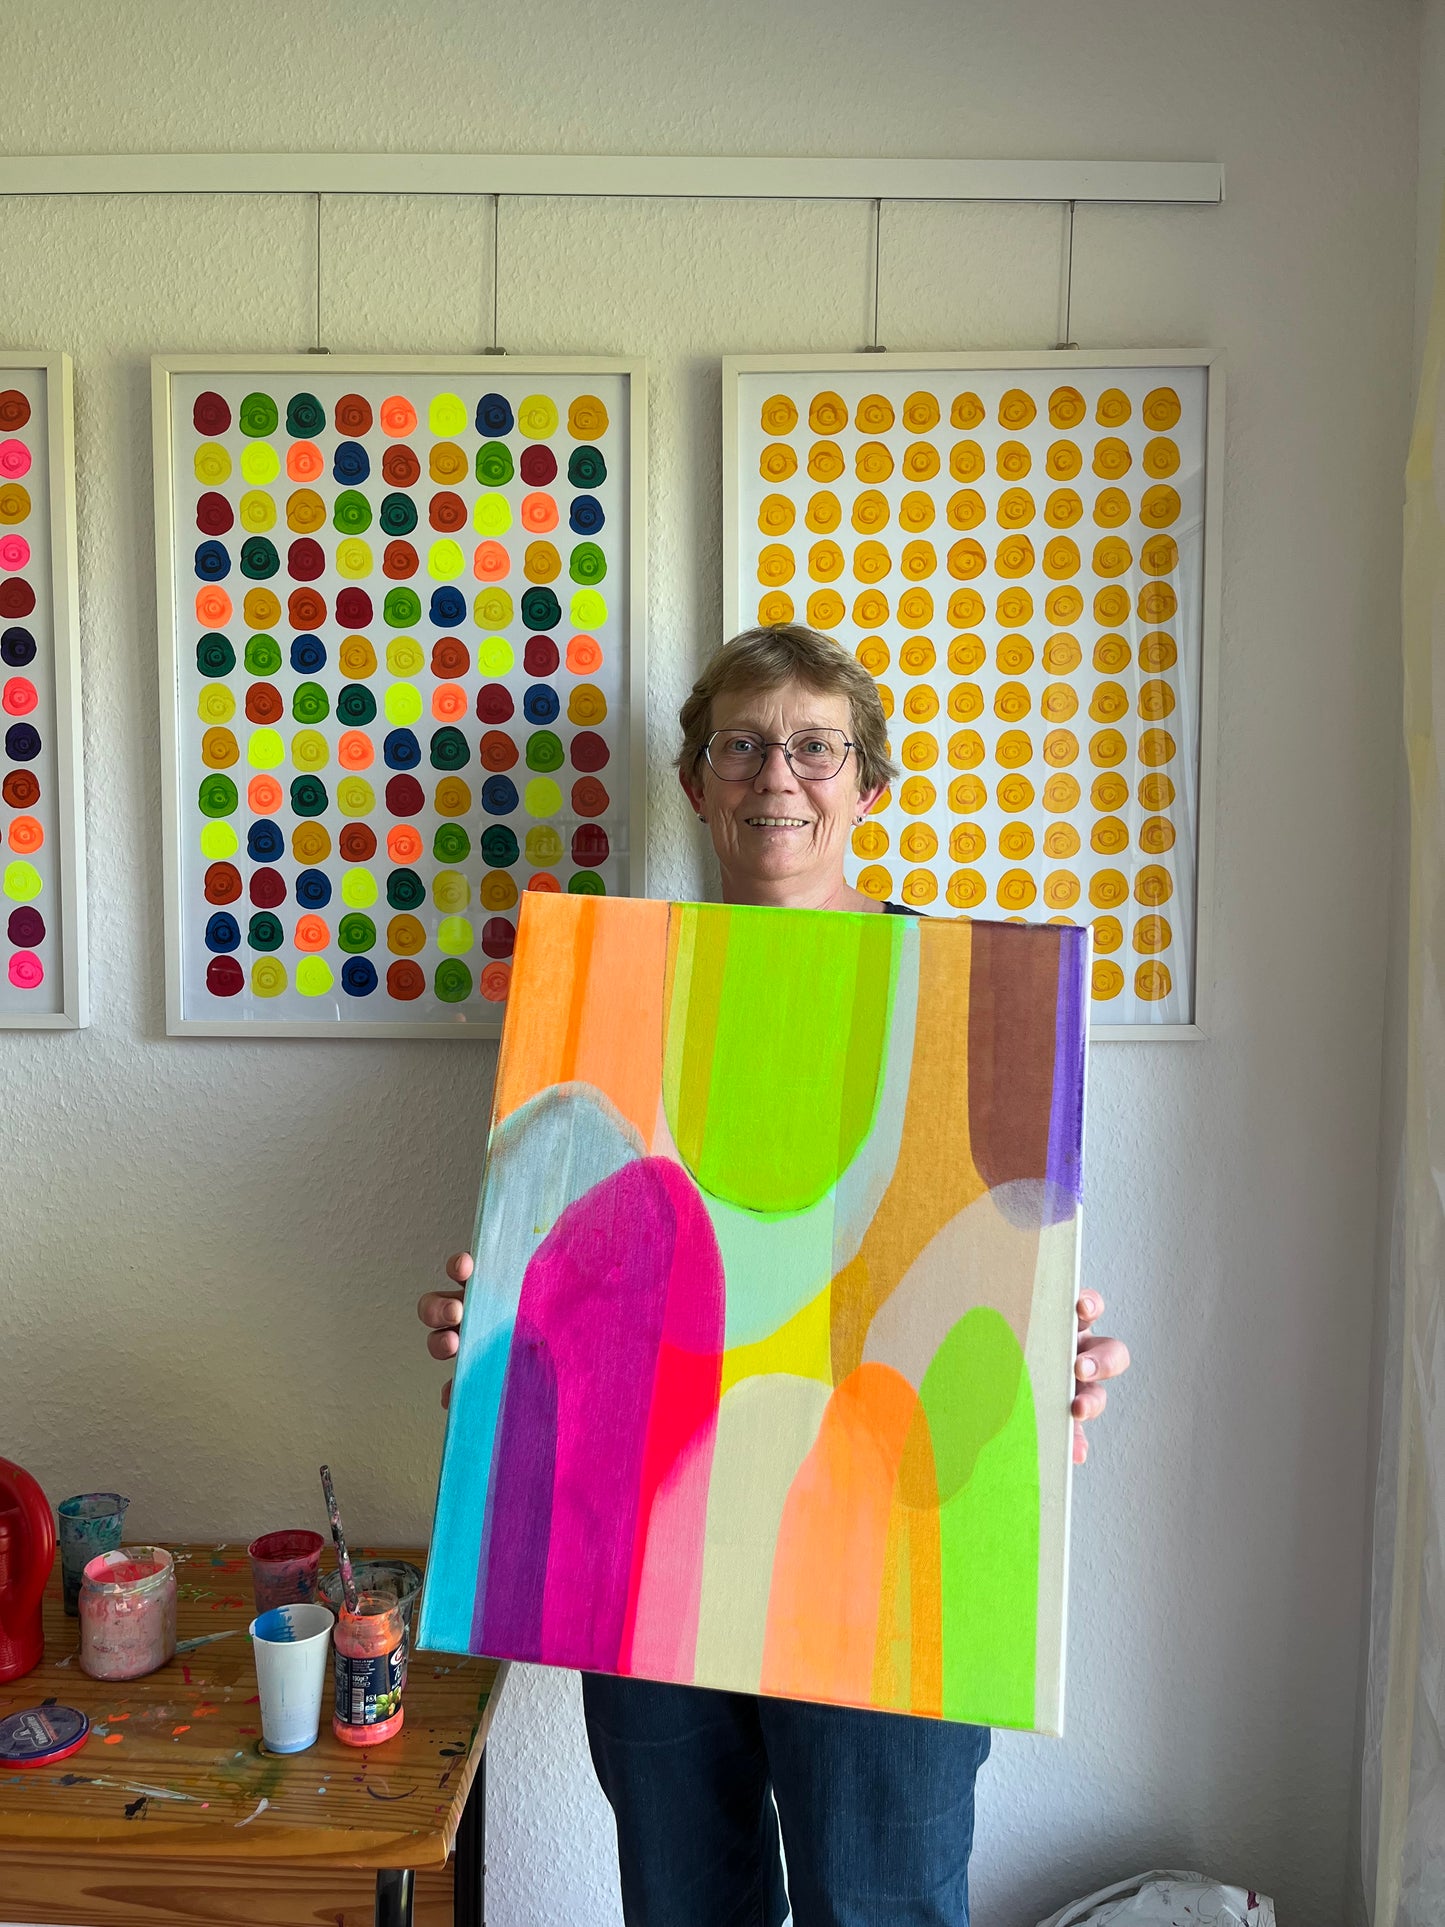 Painting Workshop "Life is short, make it nice!" with Janine in Bietigheim-Bissingen, Germany